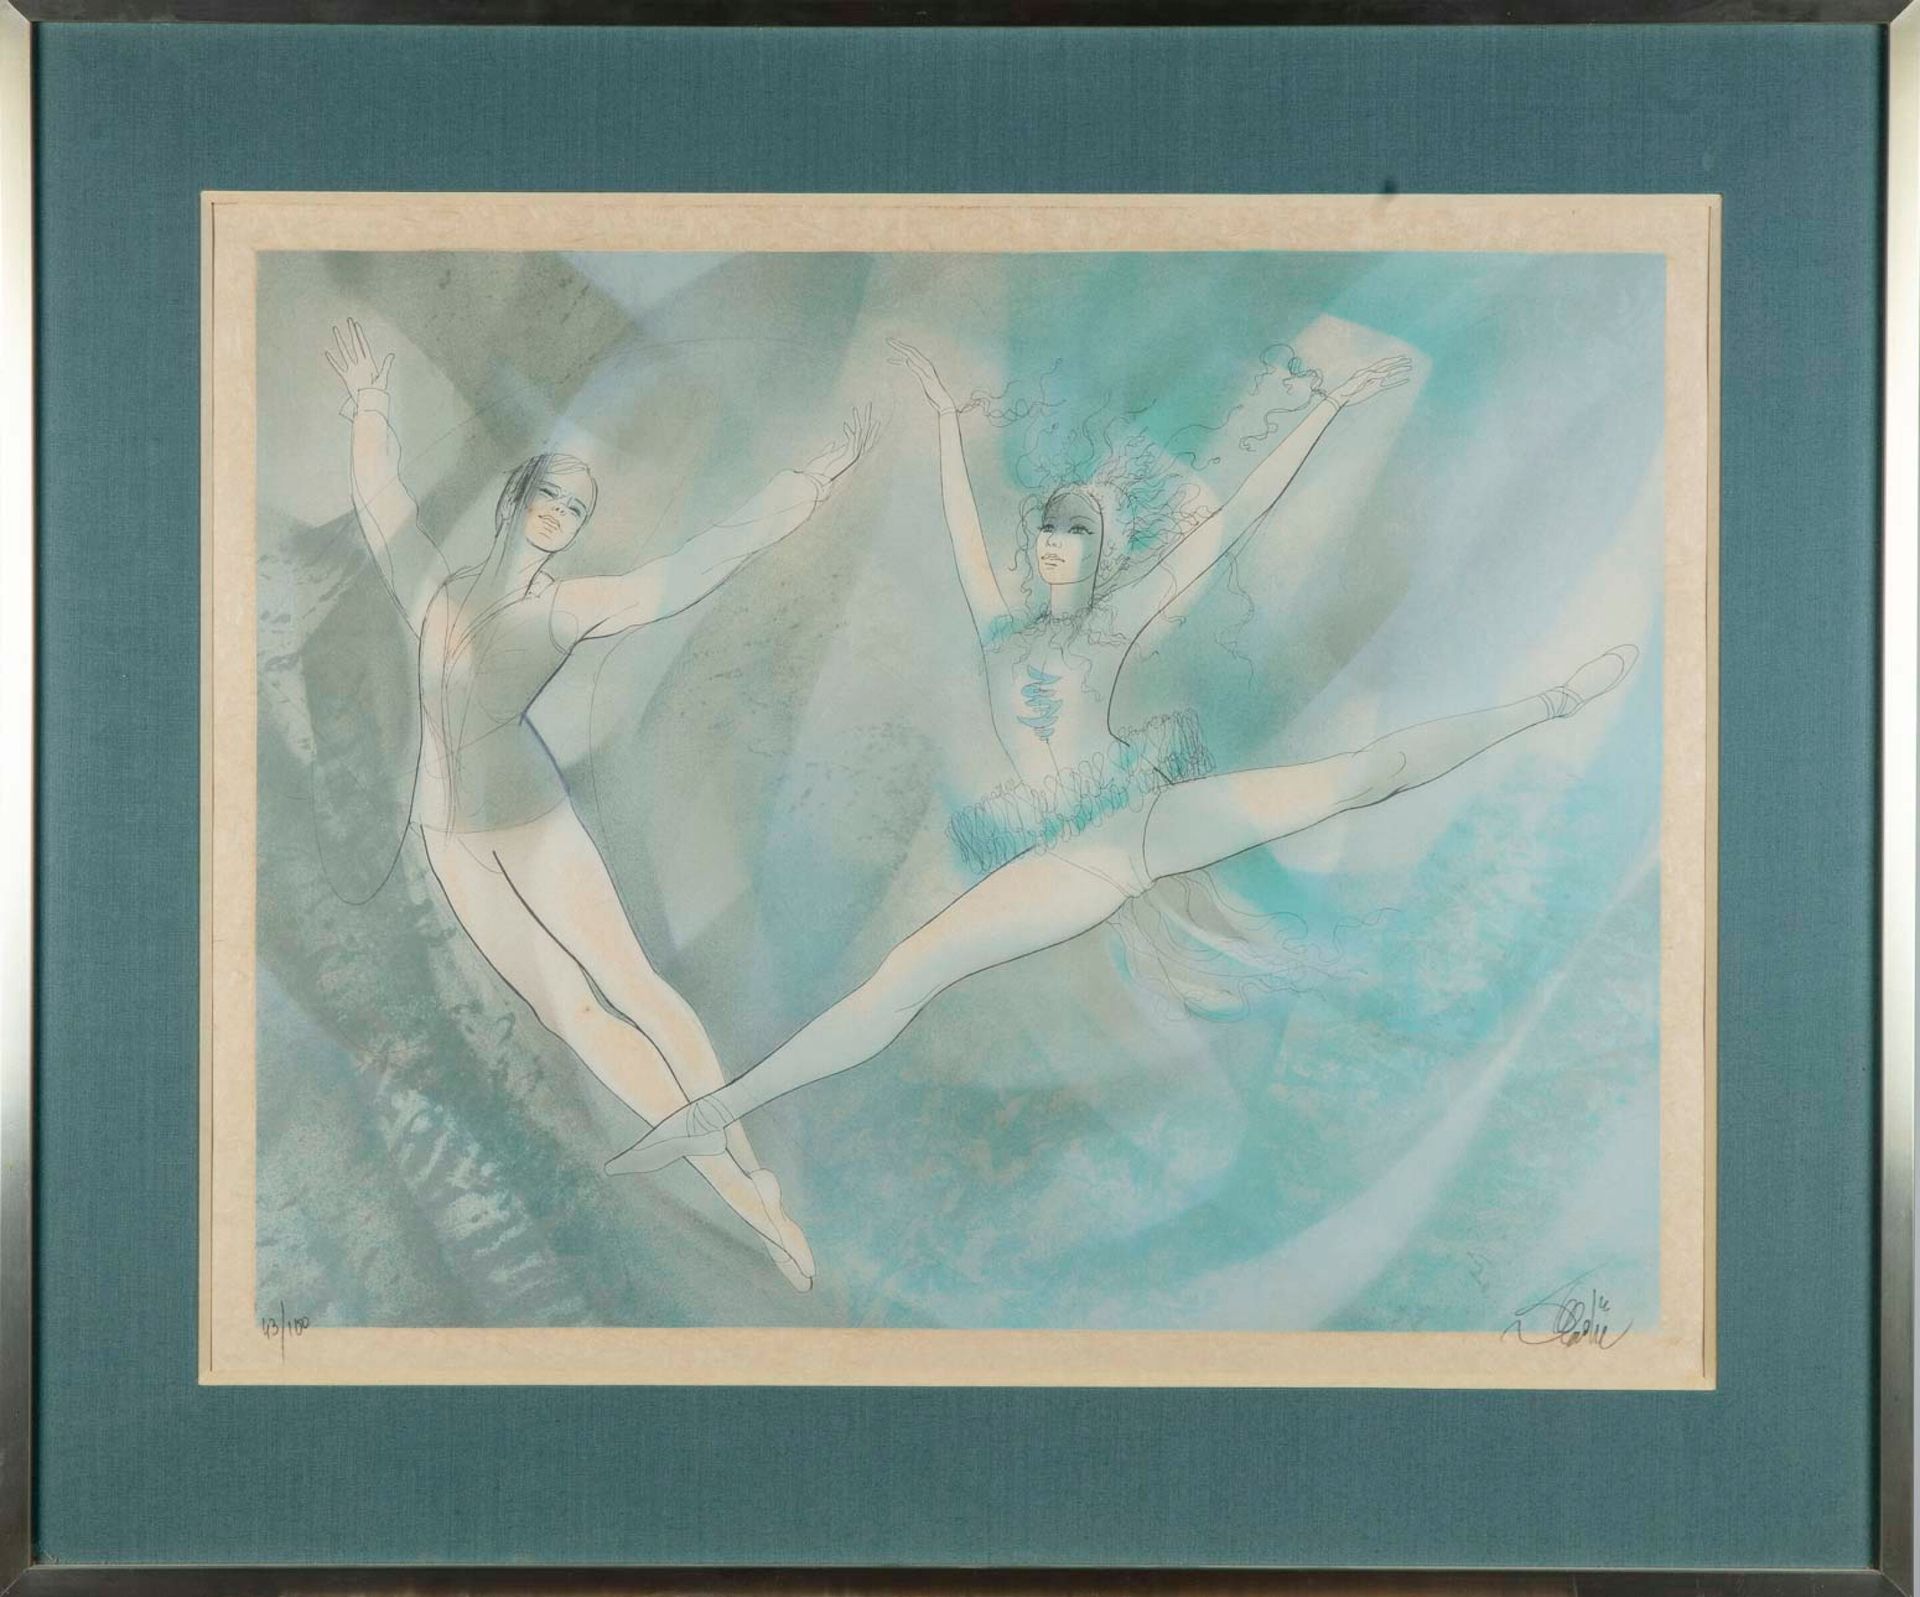 VALADIE Jean-Baptiste VALADIE (1933)

I ballerini 

Litografia su carta giappone&hellip;